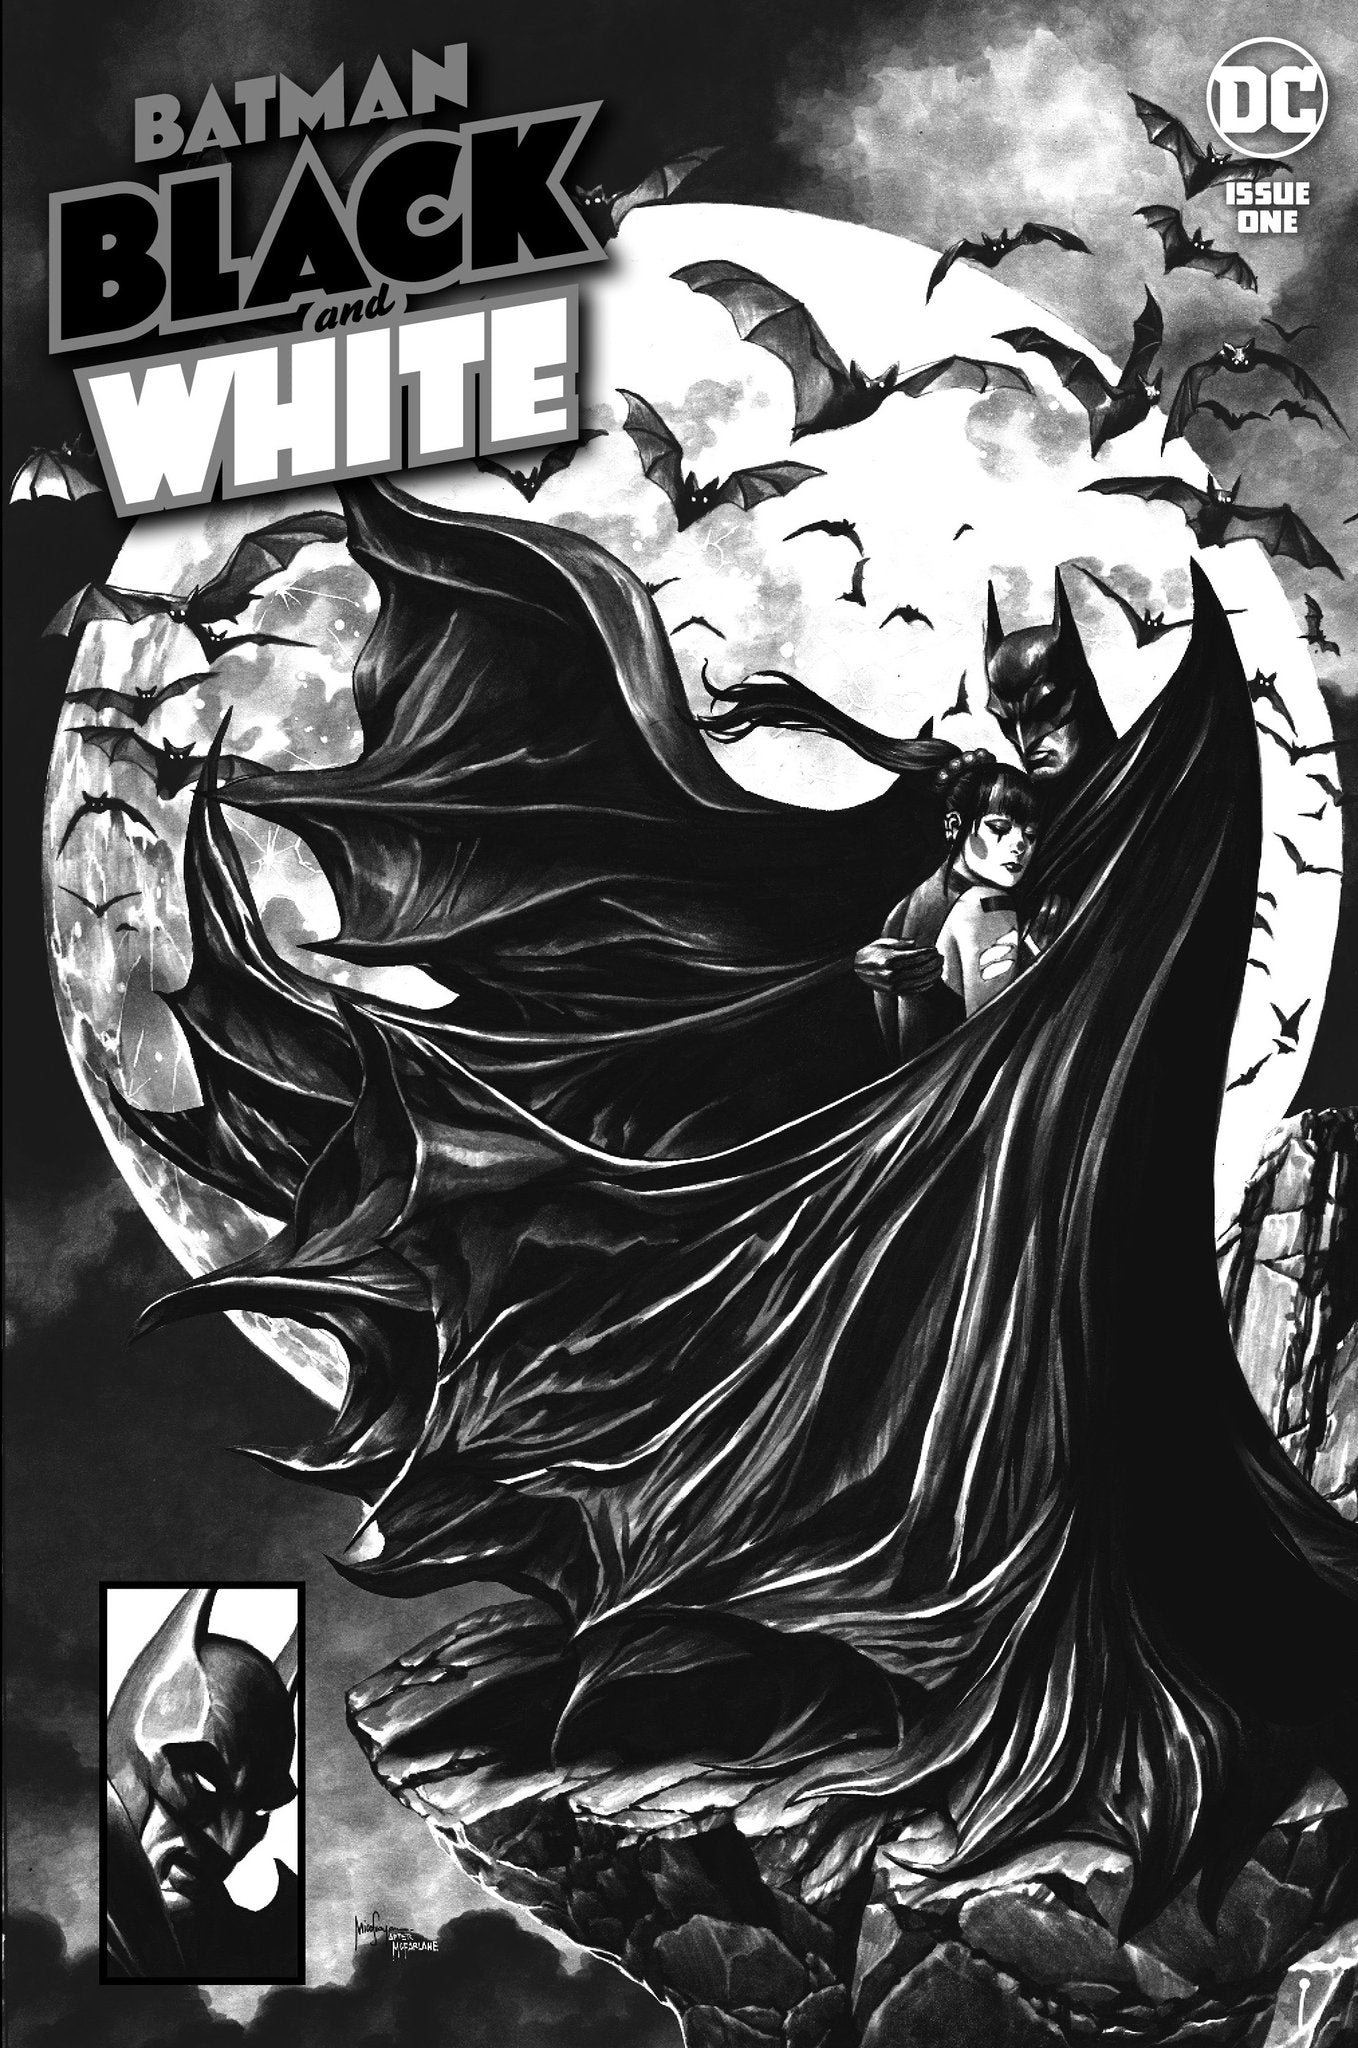 BATMAN BLACK & WHITE #1 MICO SUAYAN EXCLUSIVE TRADE DRESS